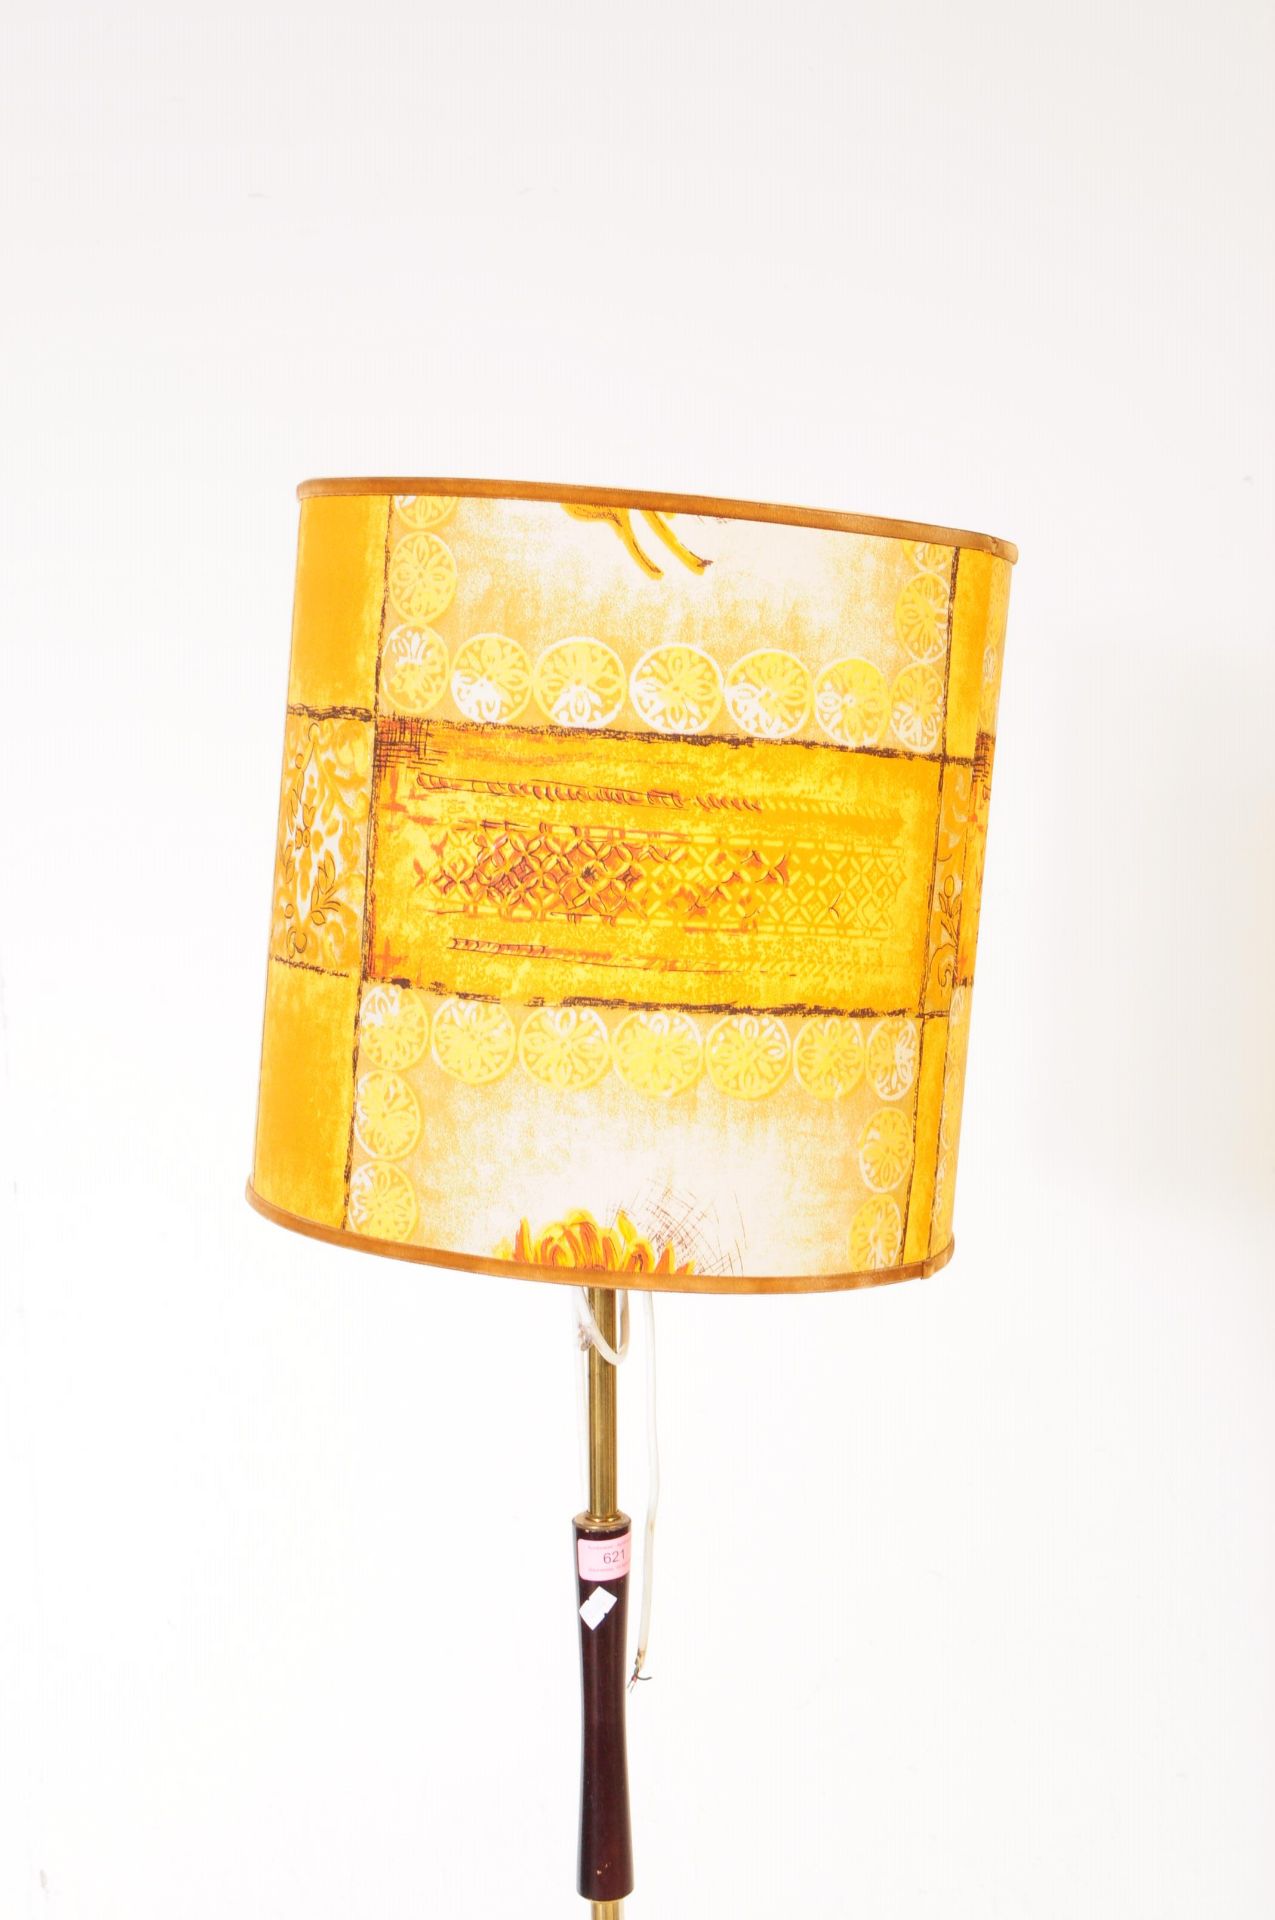 MID 20TH CENTURY DANISH MANNER STANDARD LAMP - Image 4 of 4